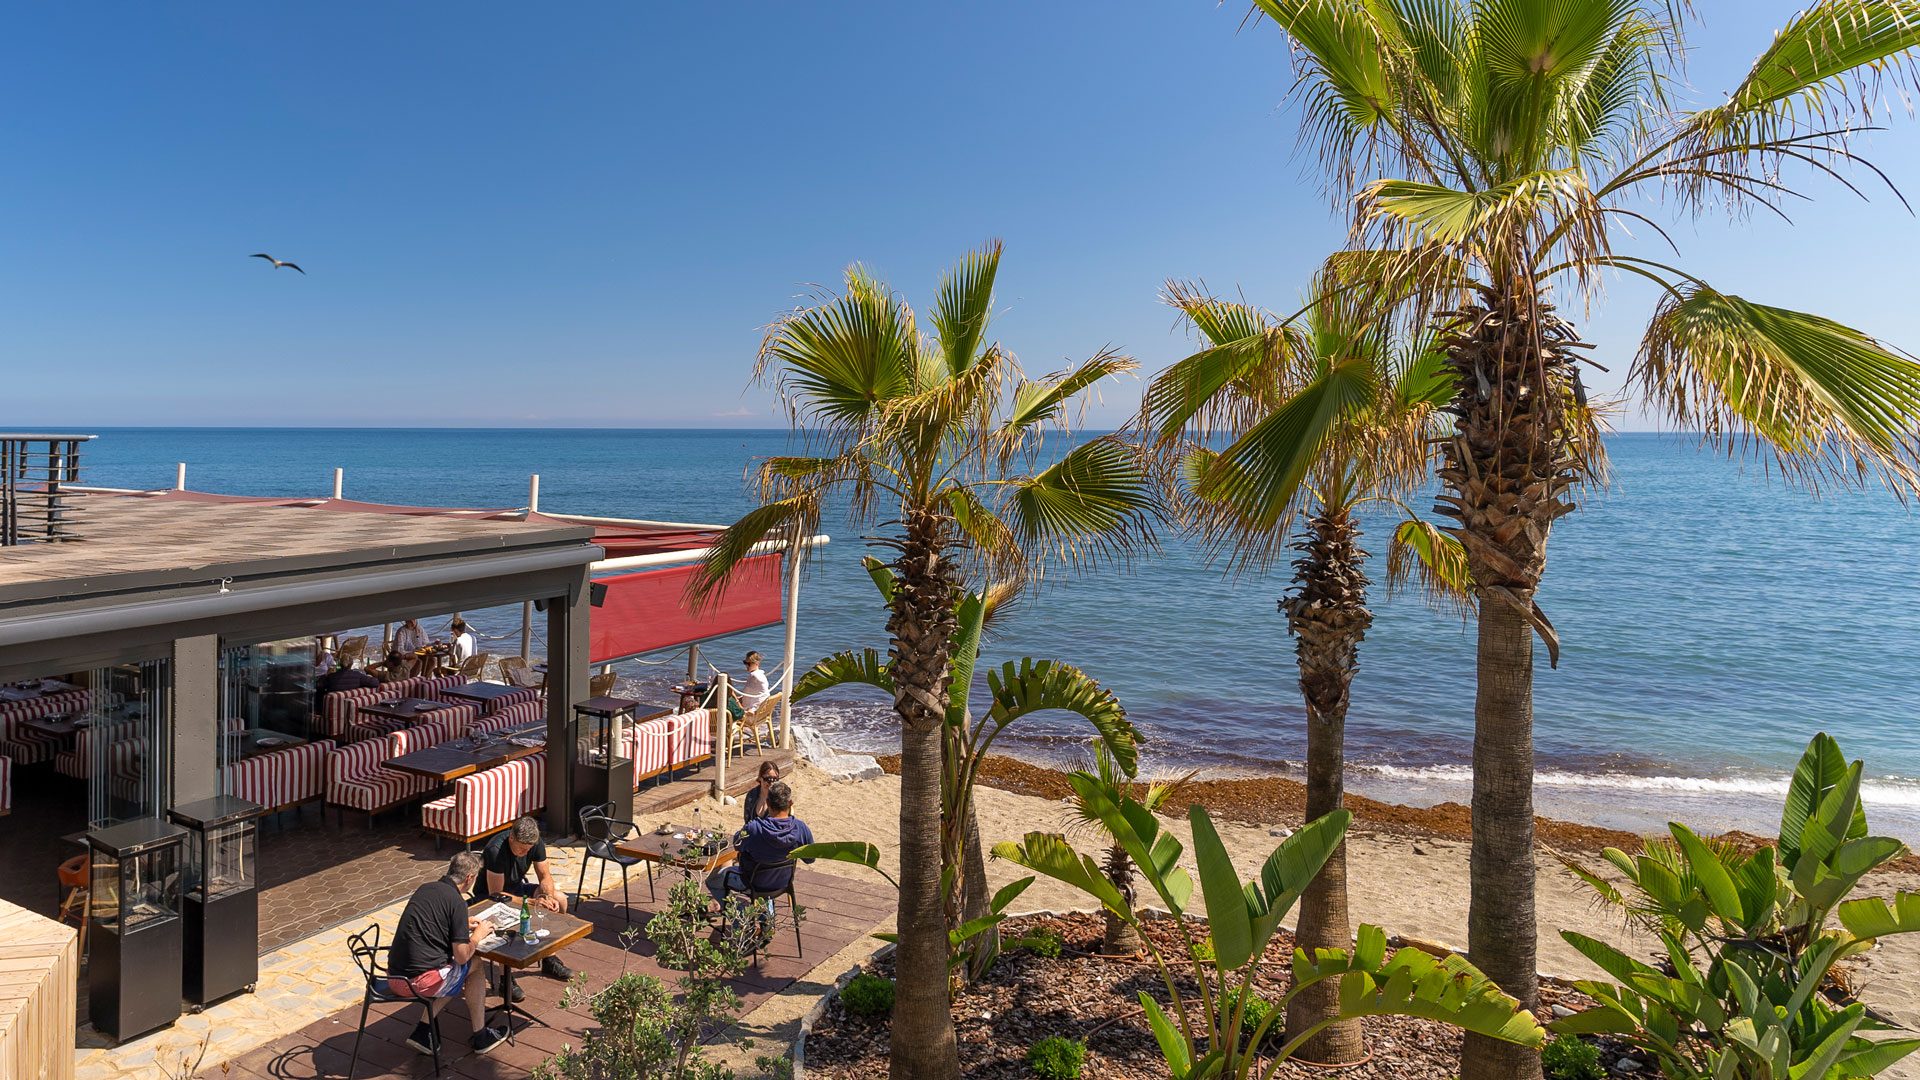 El Fuerte Marbella Soleo restaurant